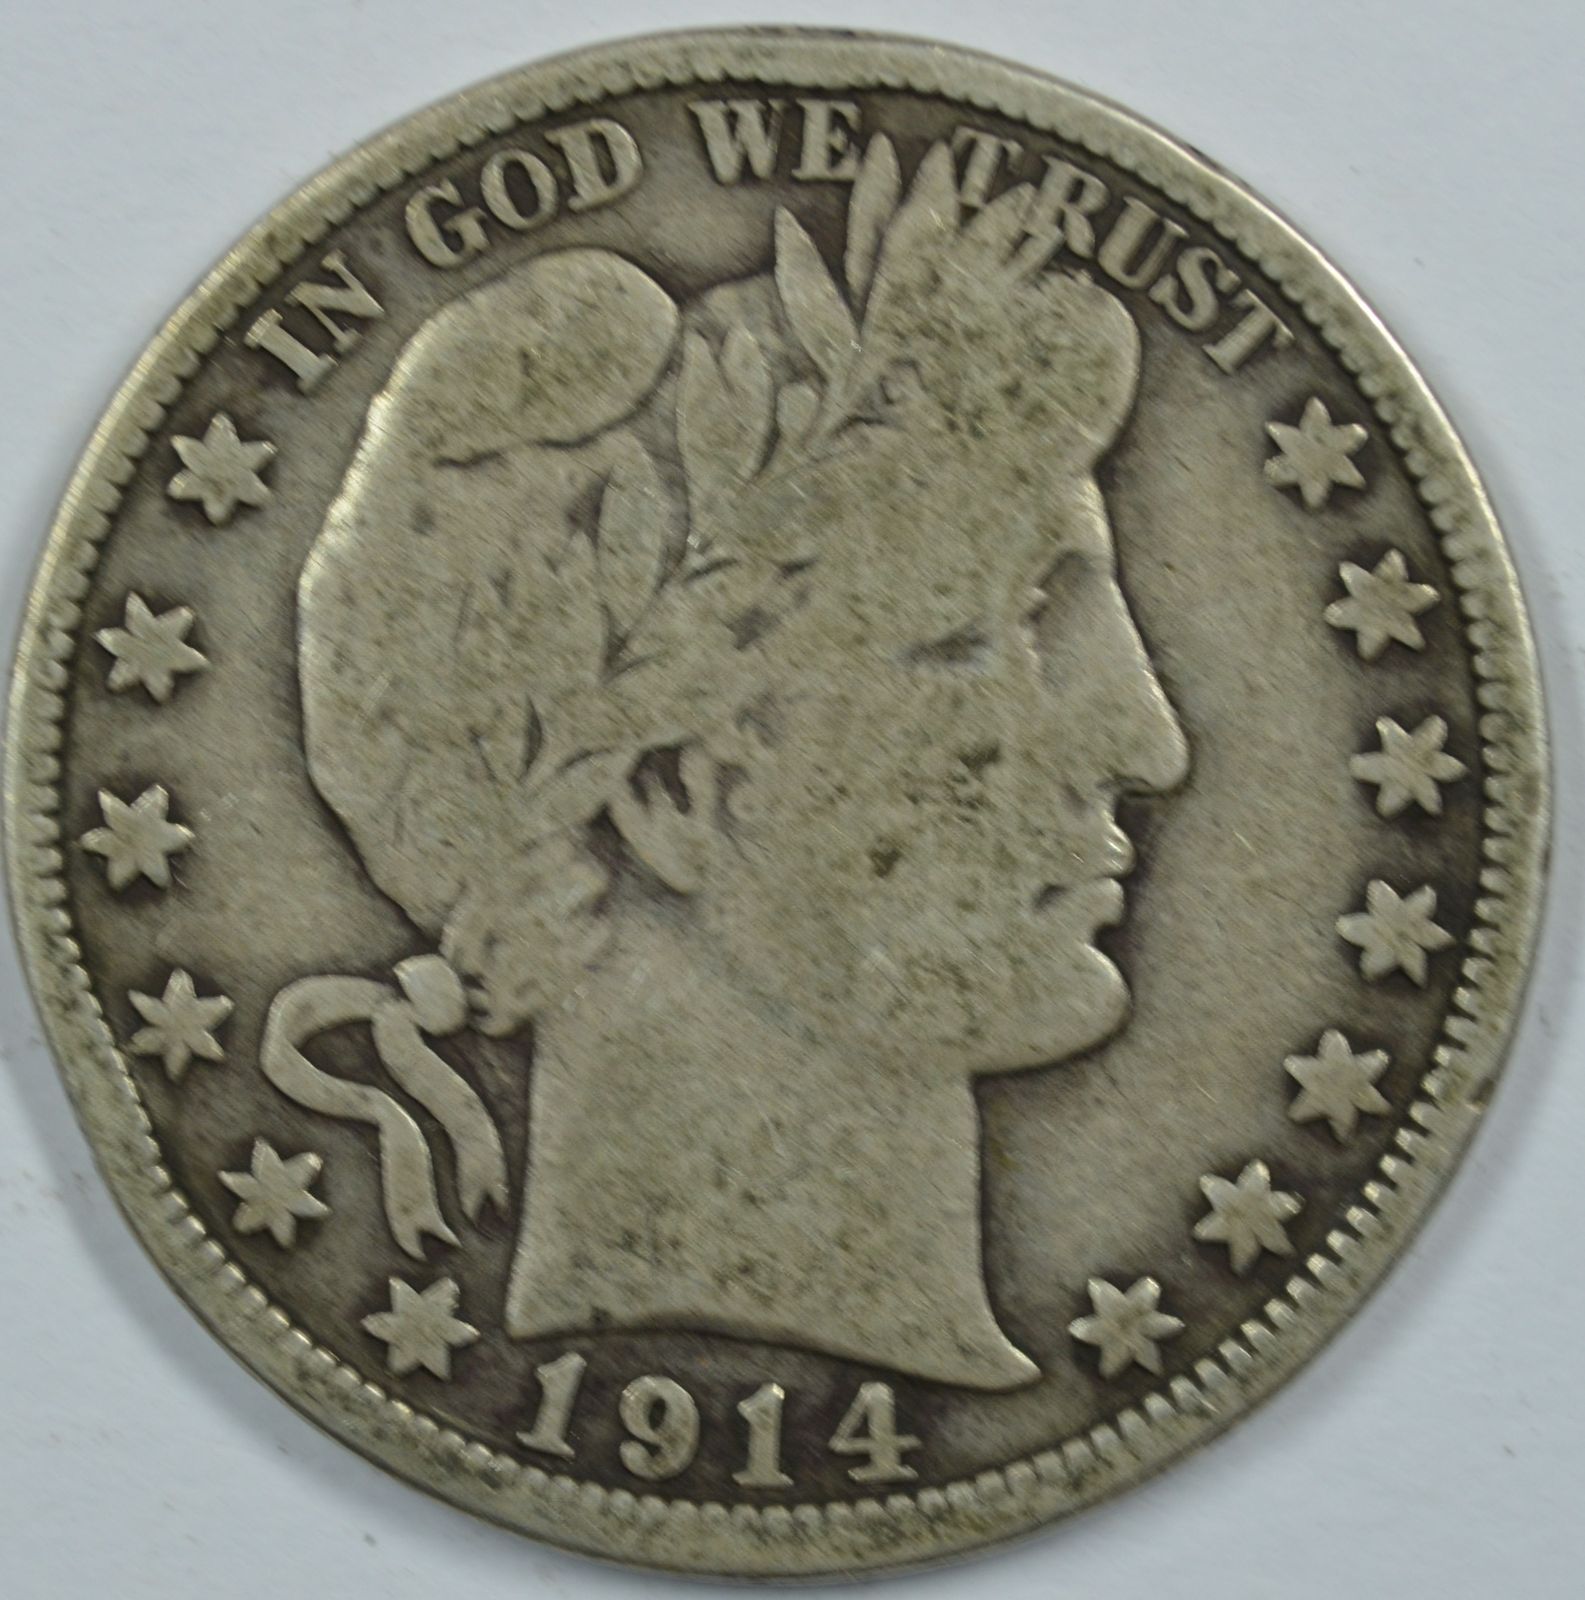 1914 P Barber circulated silver half dollar G/VG details - $165.00